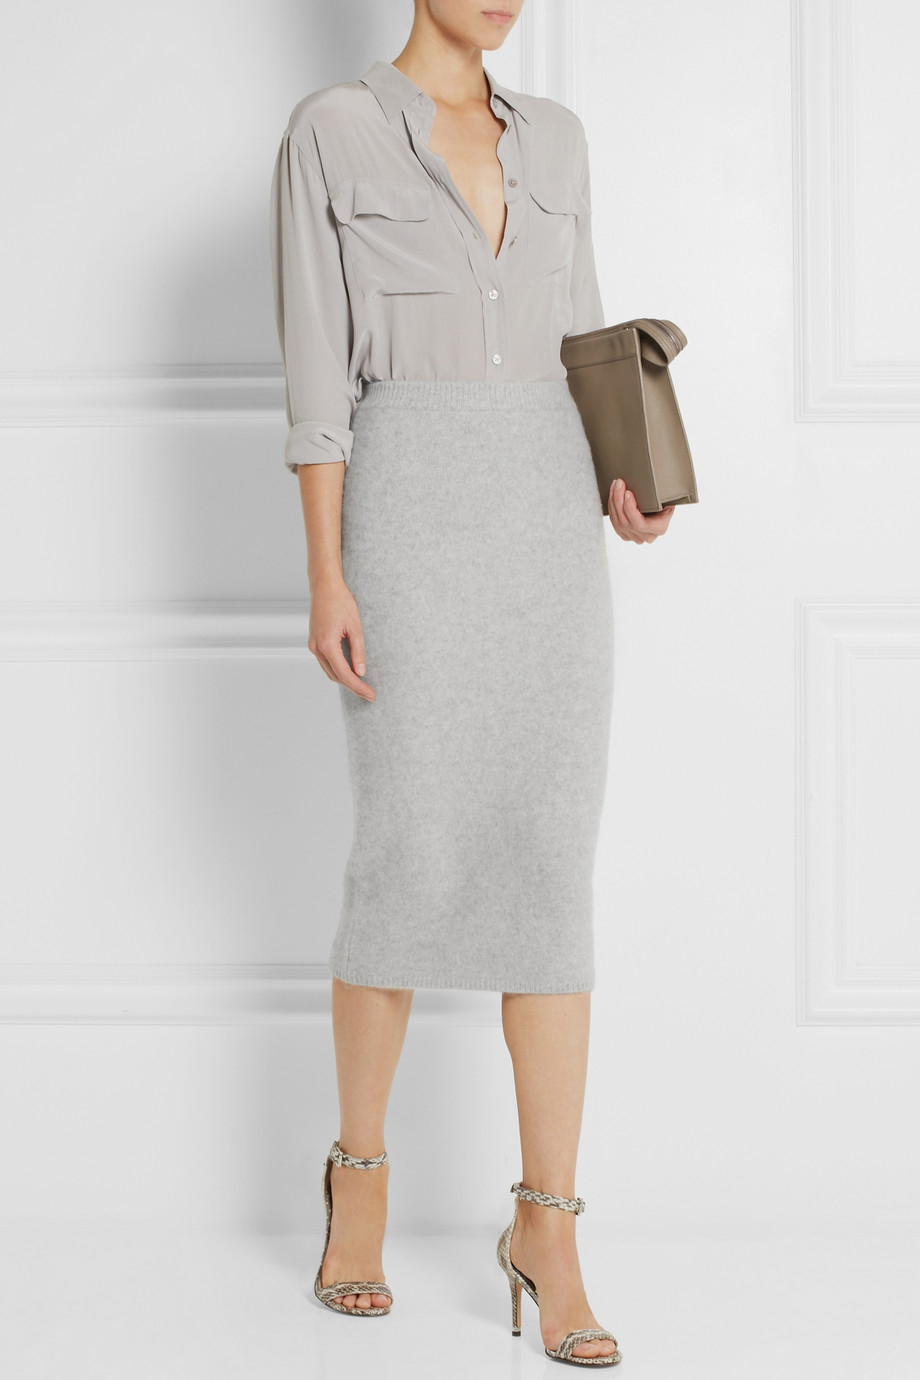 Lyst - Joseph Brushedcashmere Midi Skirt in Gray